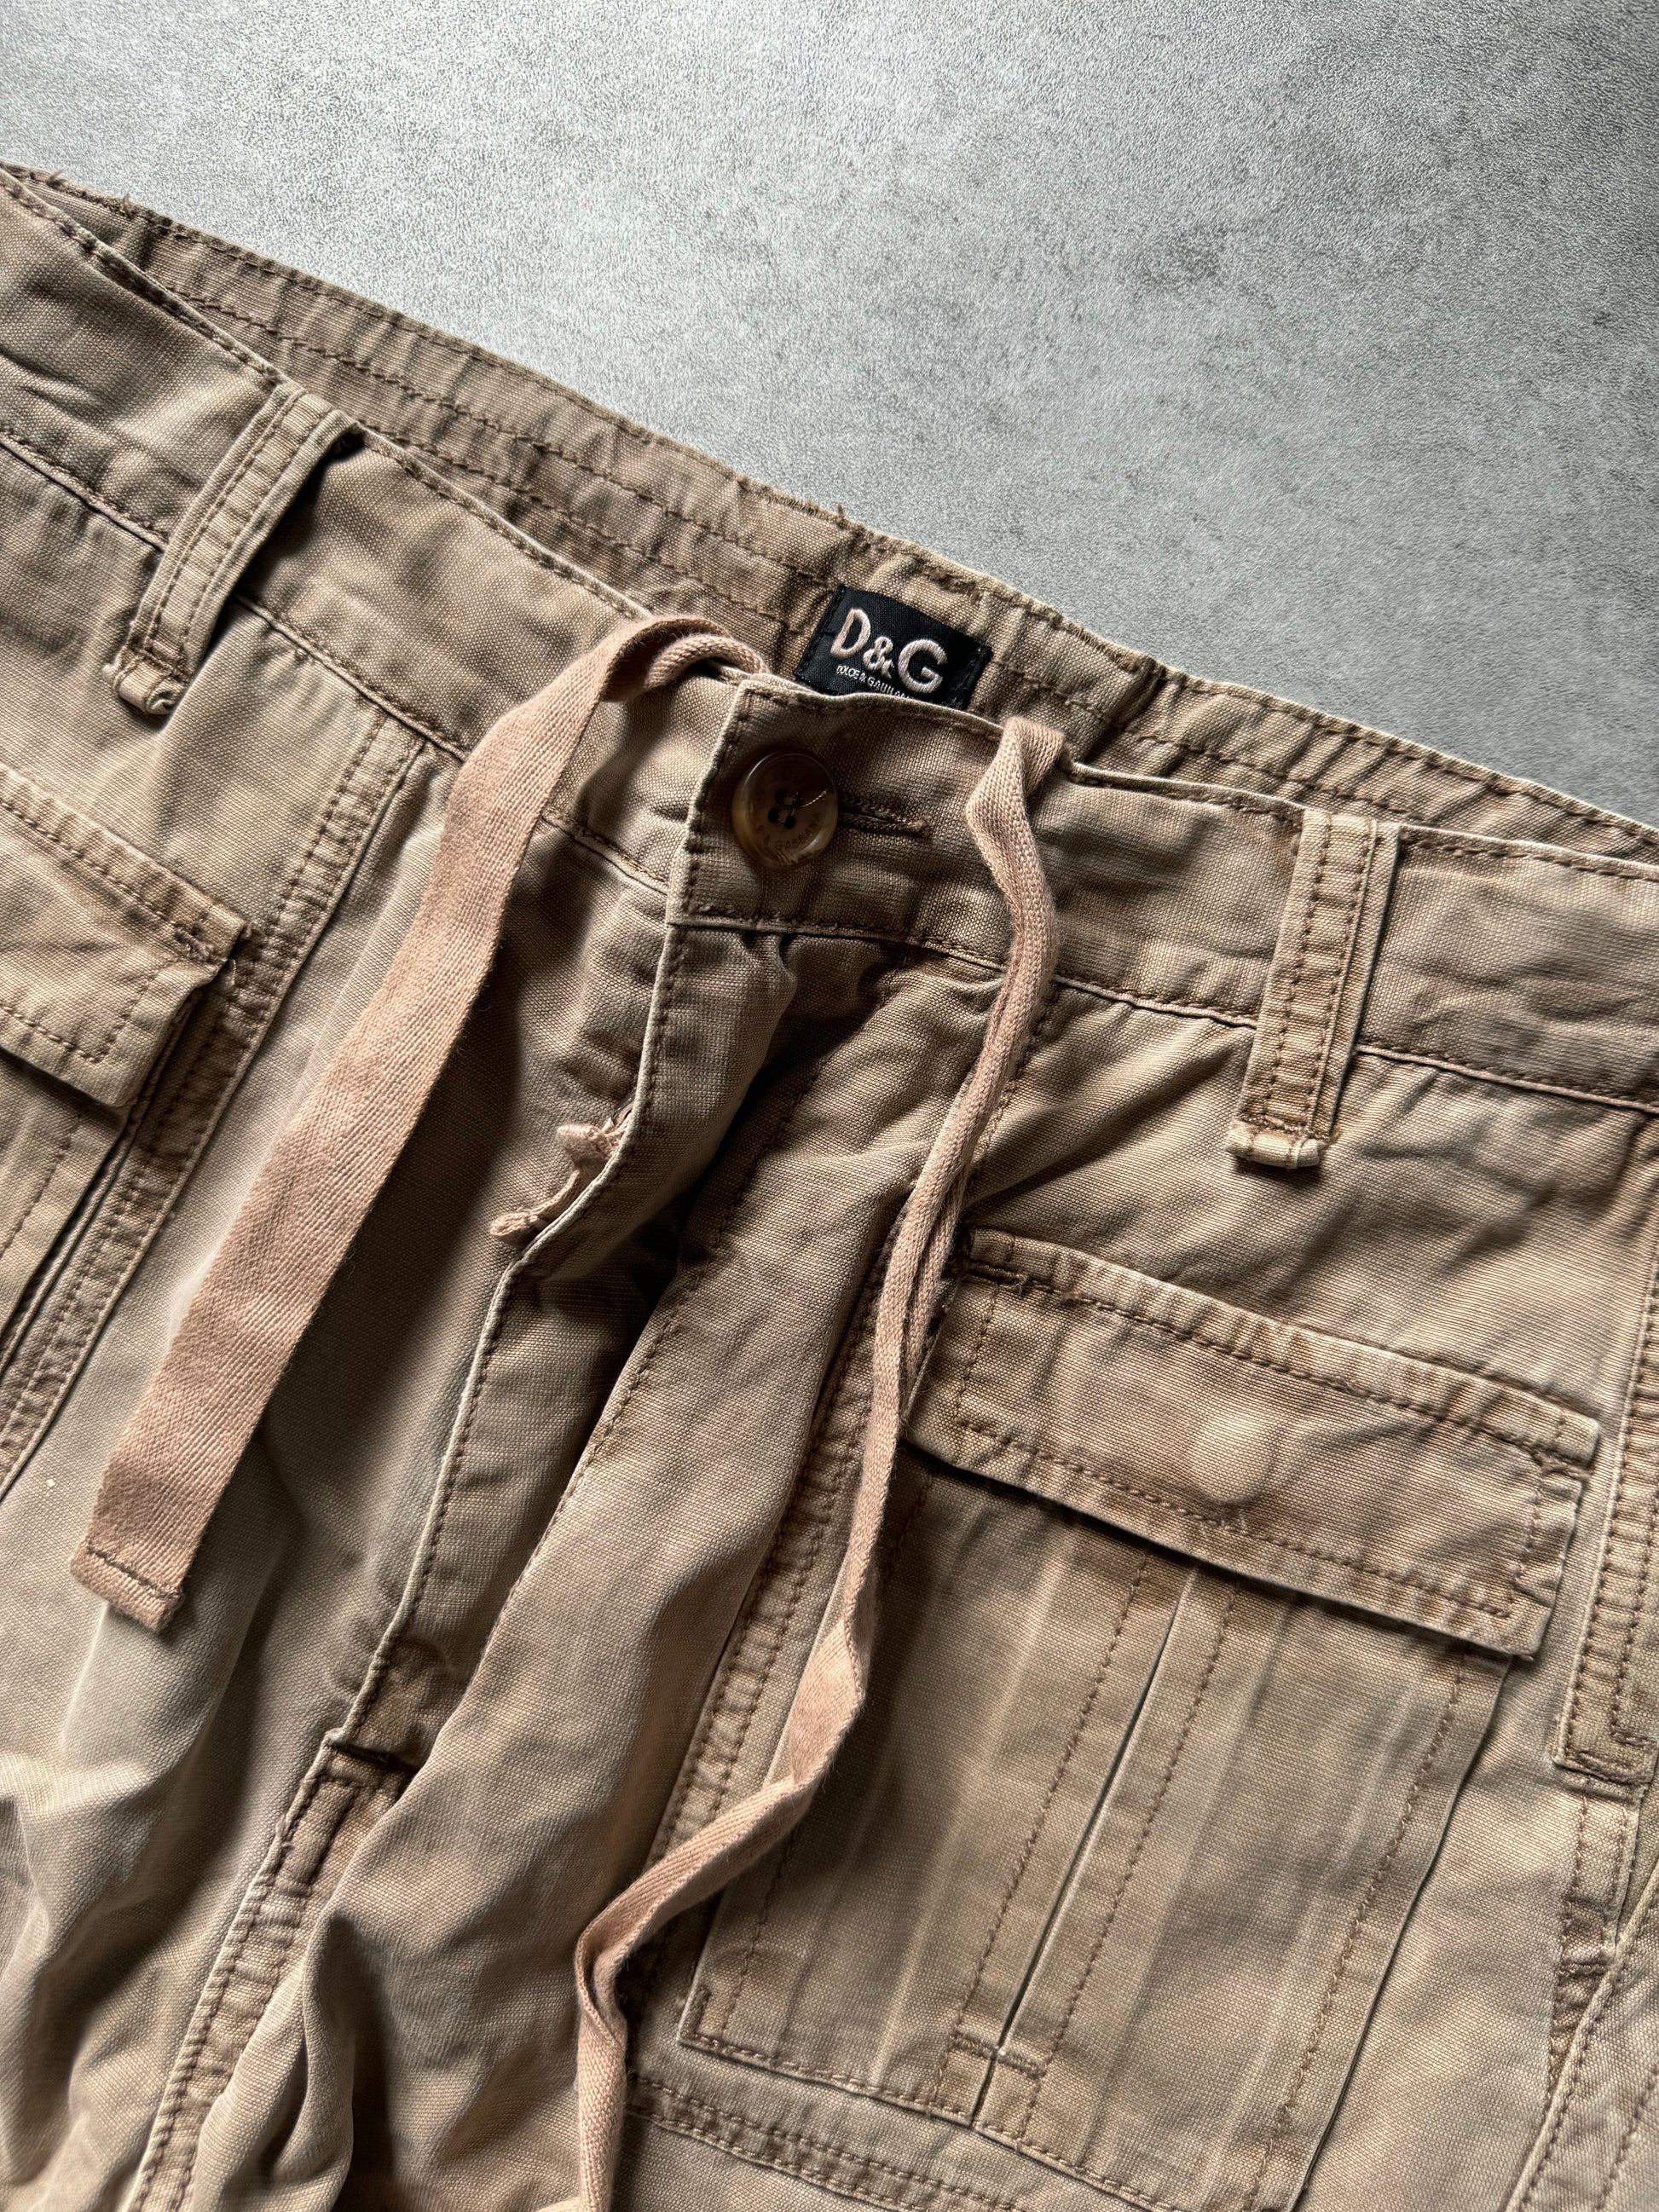 FW2006 Dolce & Gabbana Cargo Army Pants (L) - 8